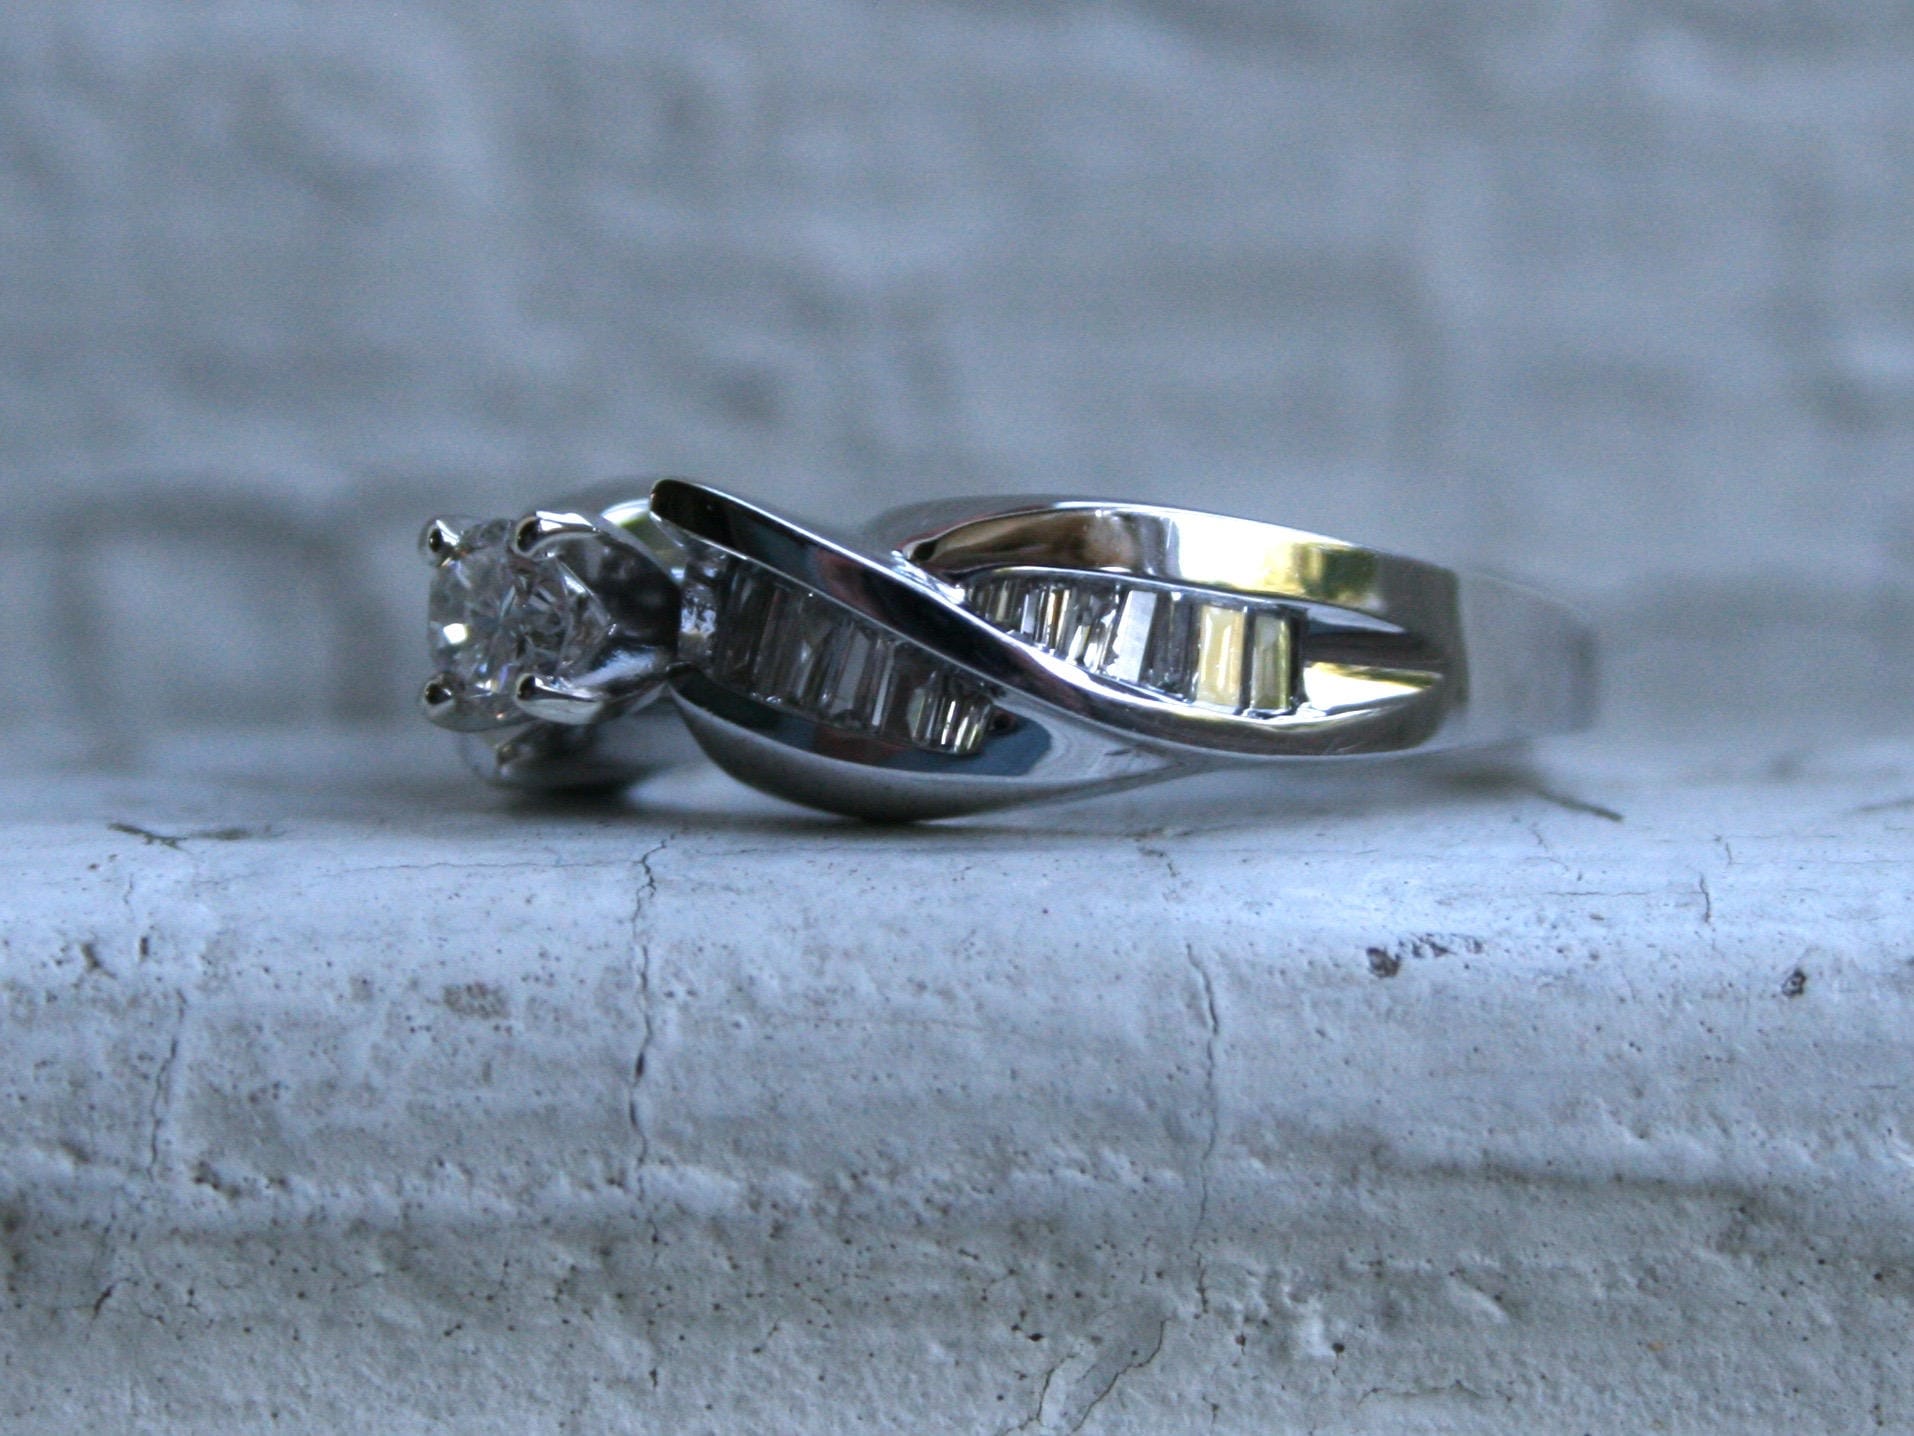 Vintage Channel 14K White Gold Baguette Cut Diamond Ring Engagement Ring - 0.68ct